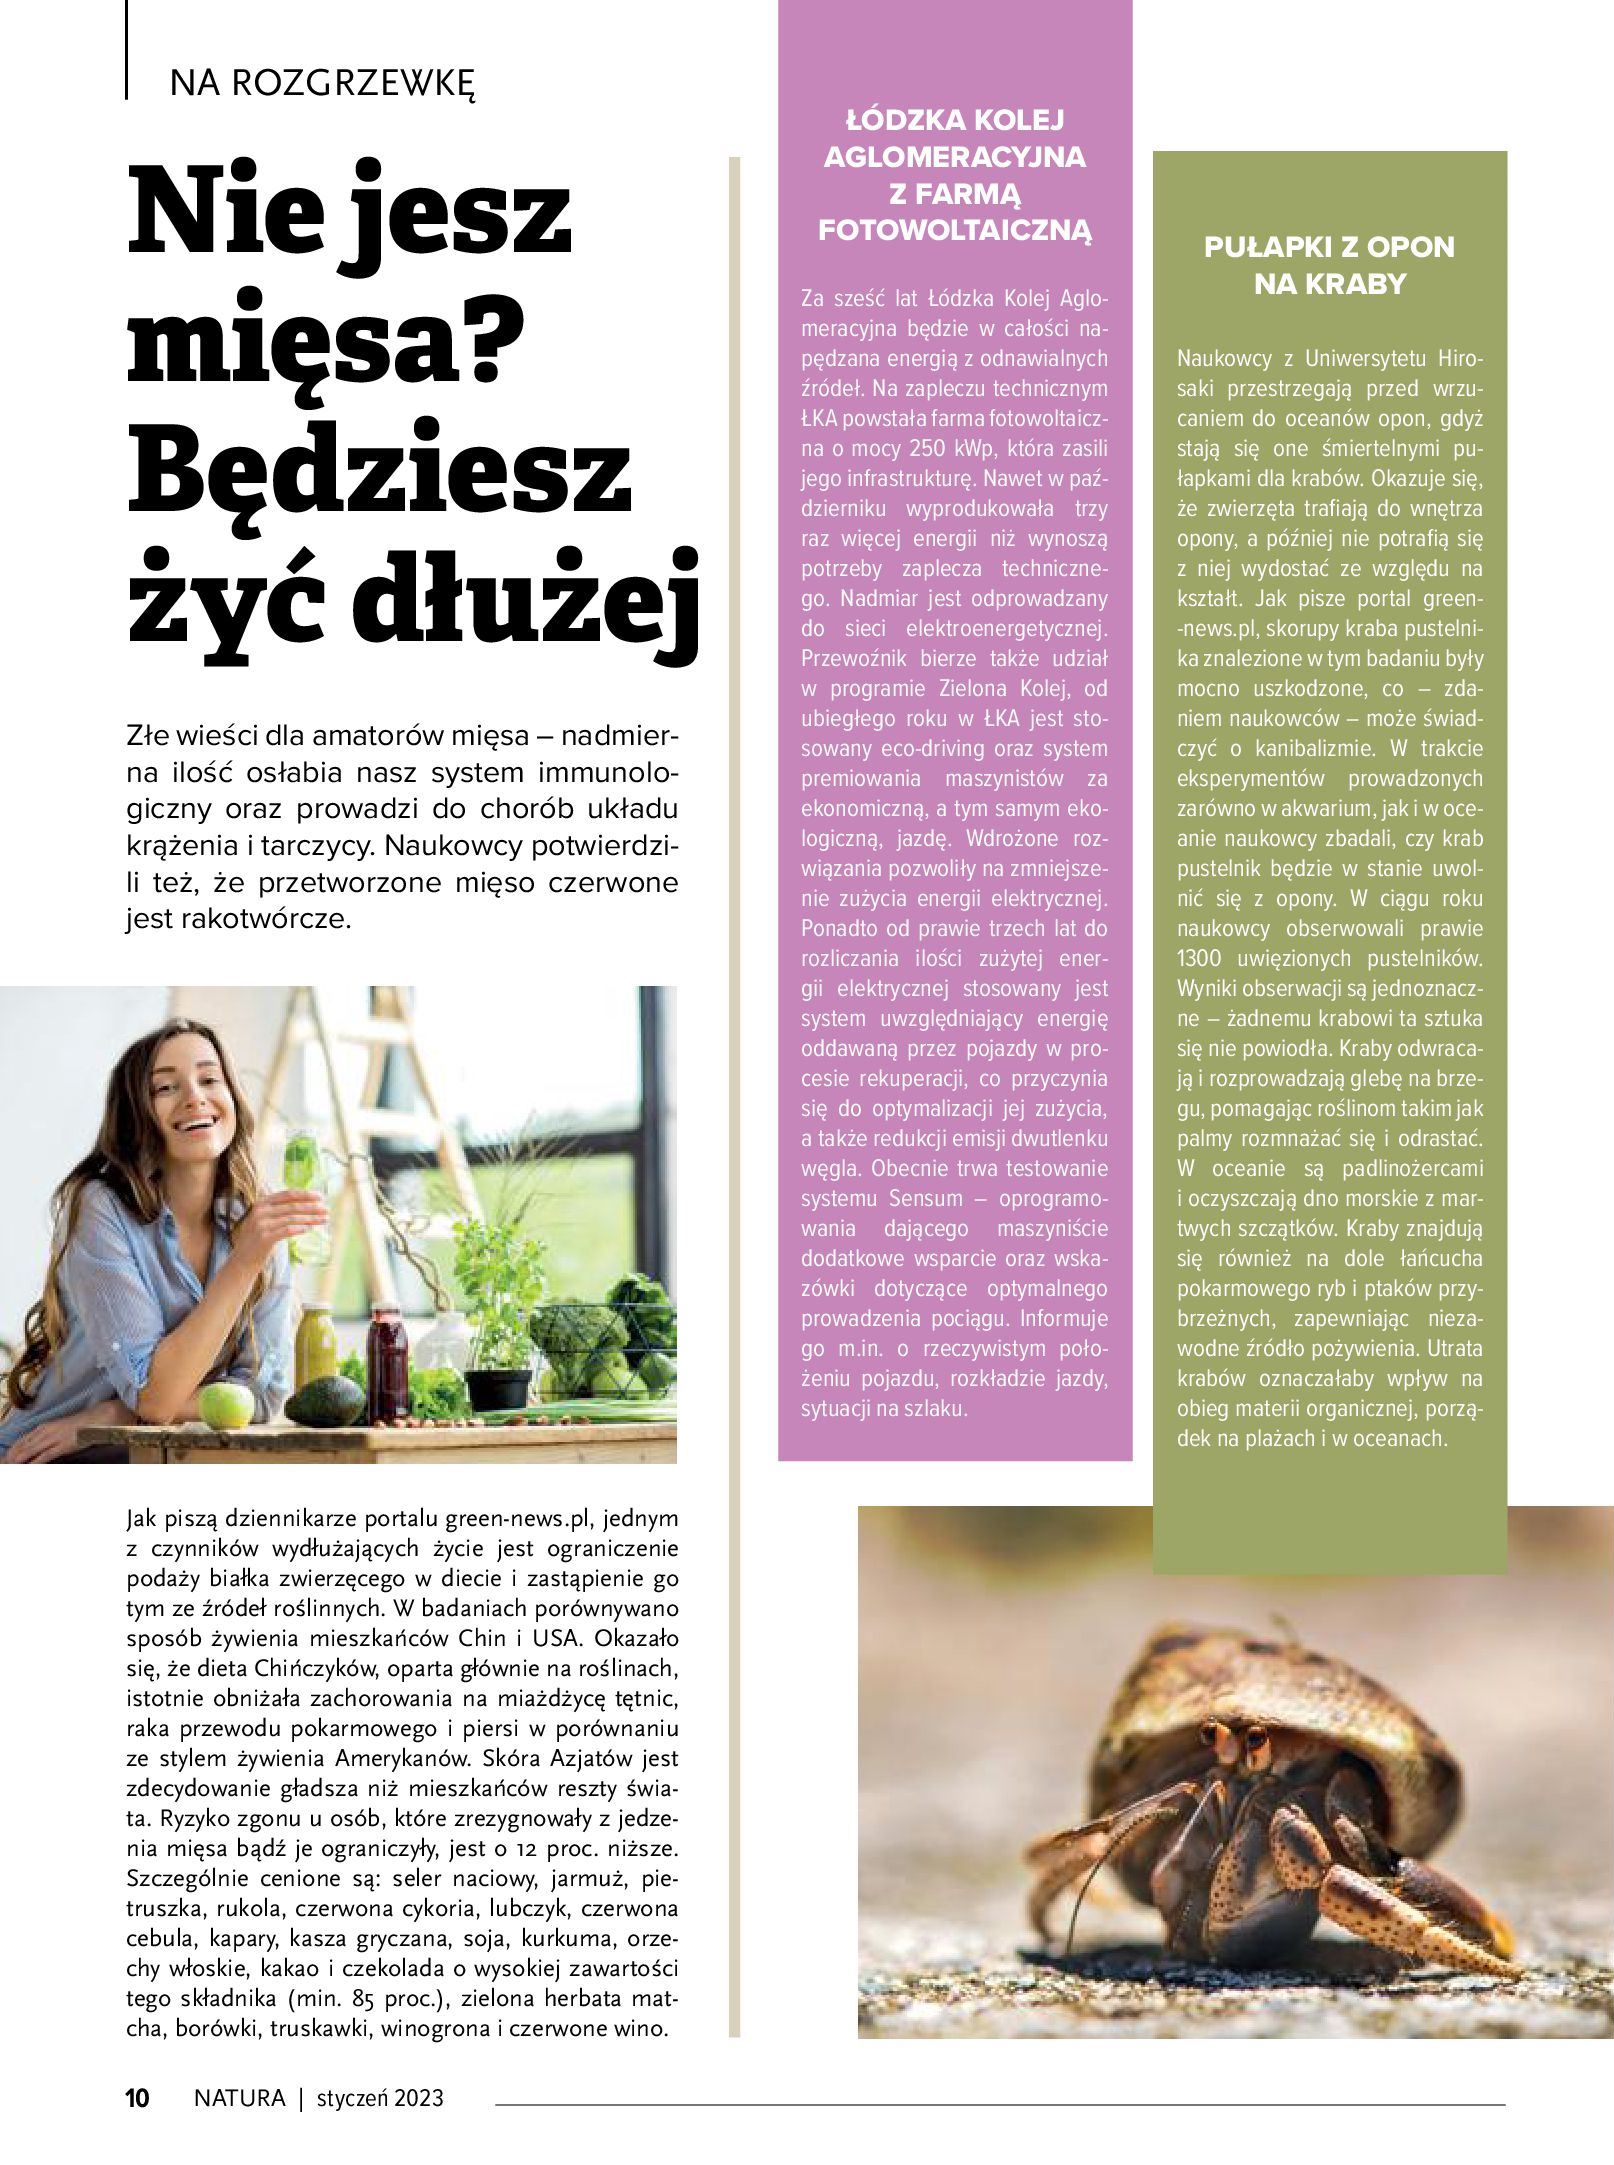 Gazetka Drogerie Natura: Magazyn Drogerie Natura - Styczeń 2023 2023-01-01 page-10